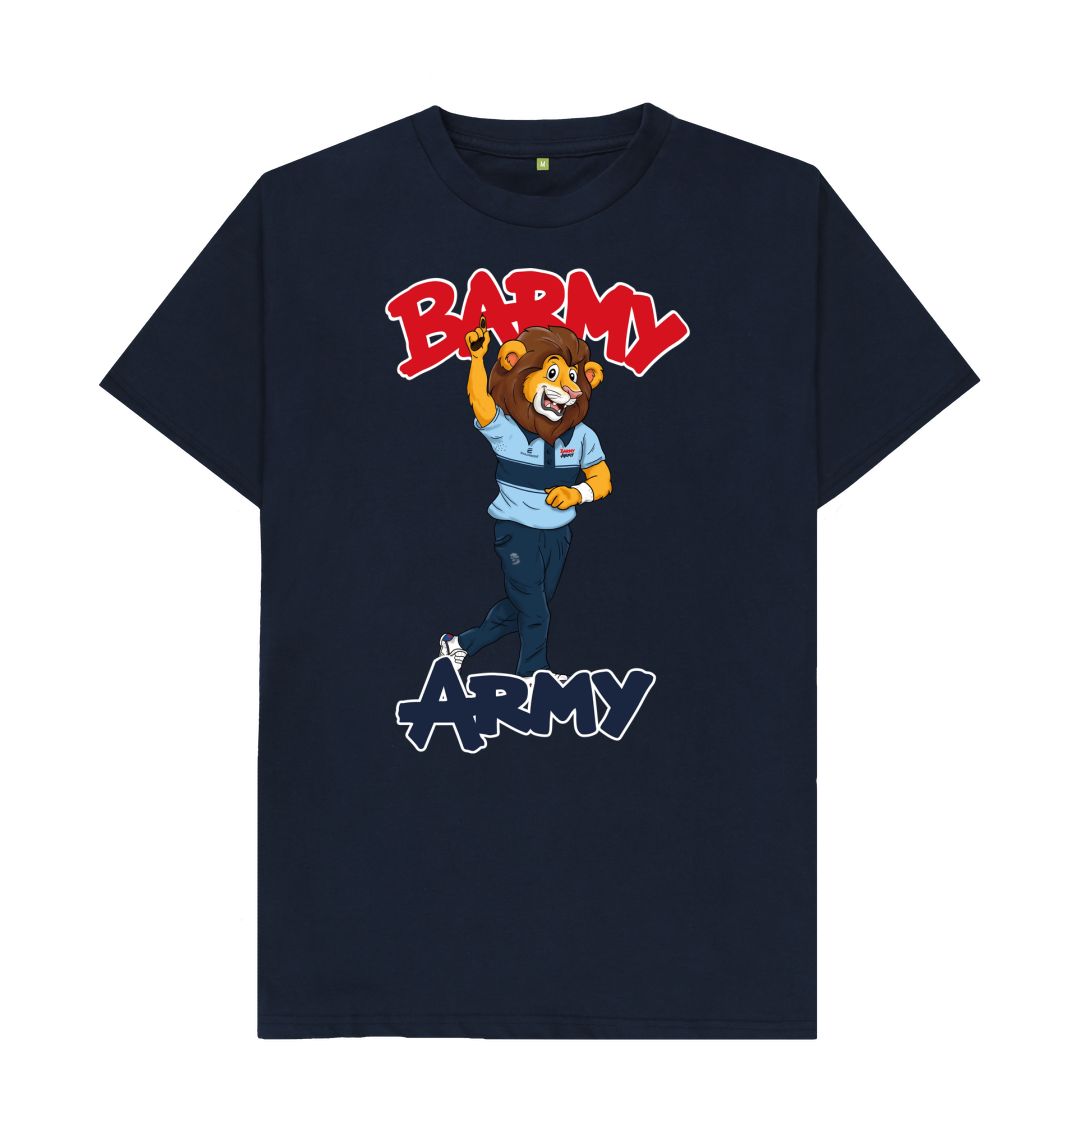 Navy Blue Barmy Army Mascot Send Off Tees - Men's